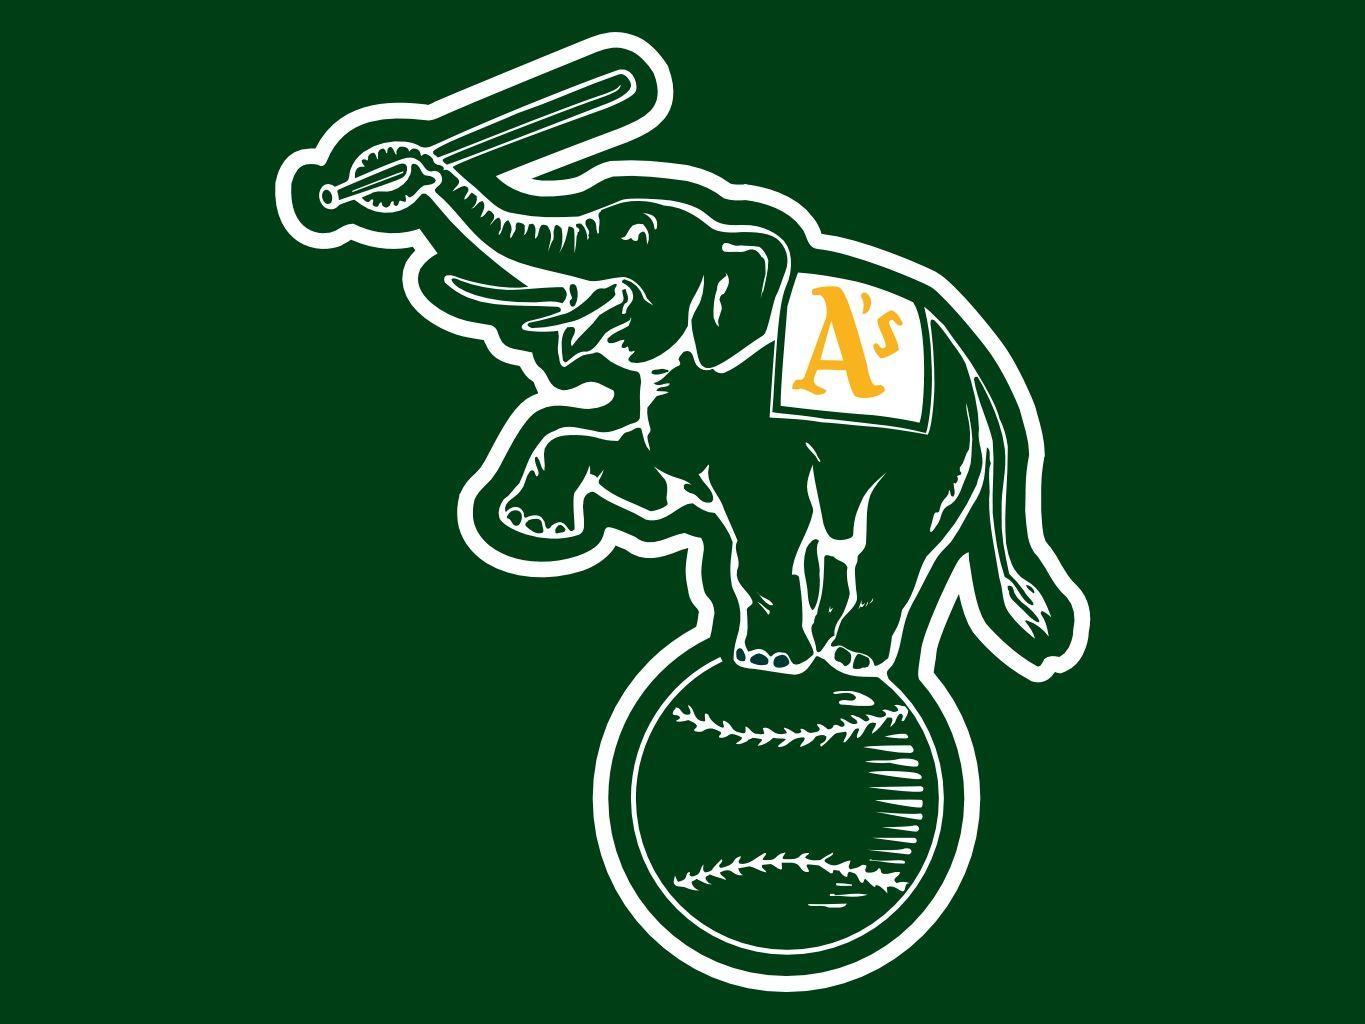 Oakland Athletics Elephant Logo - Oakland Athletics Elephant Wallpaper | Oakland A's Themes | Oakland ...